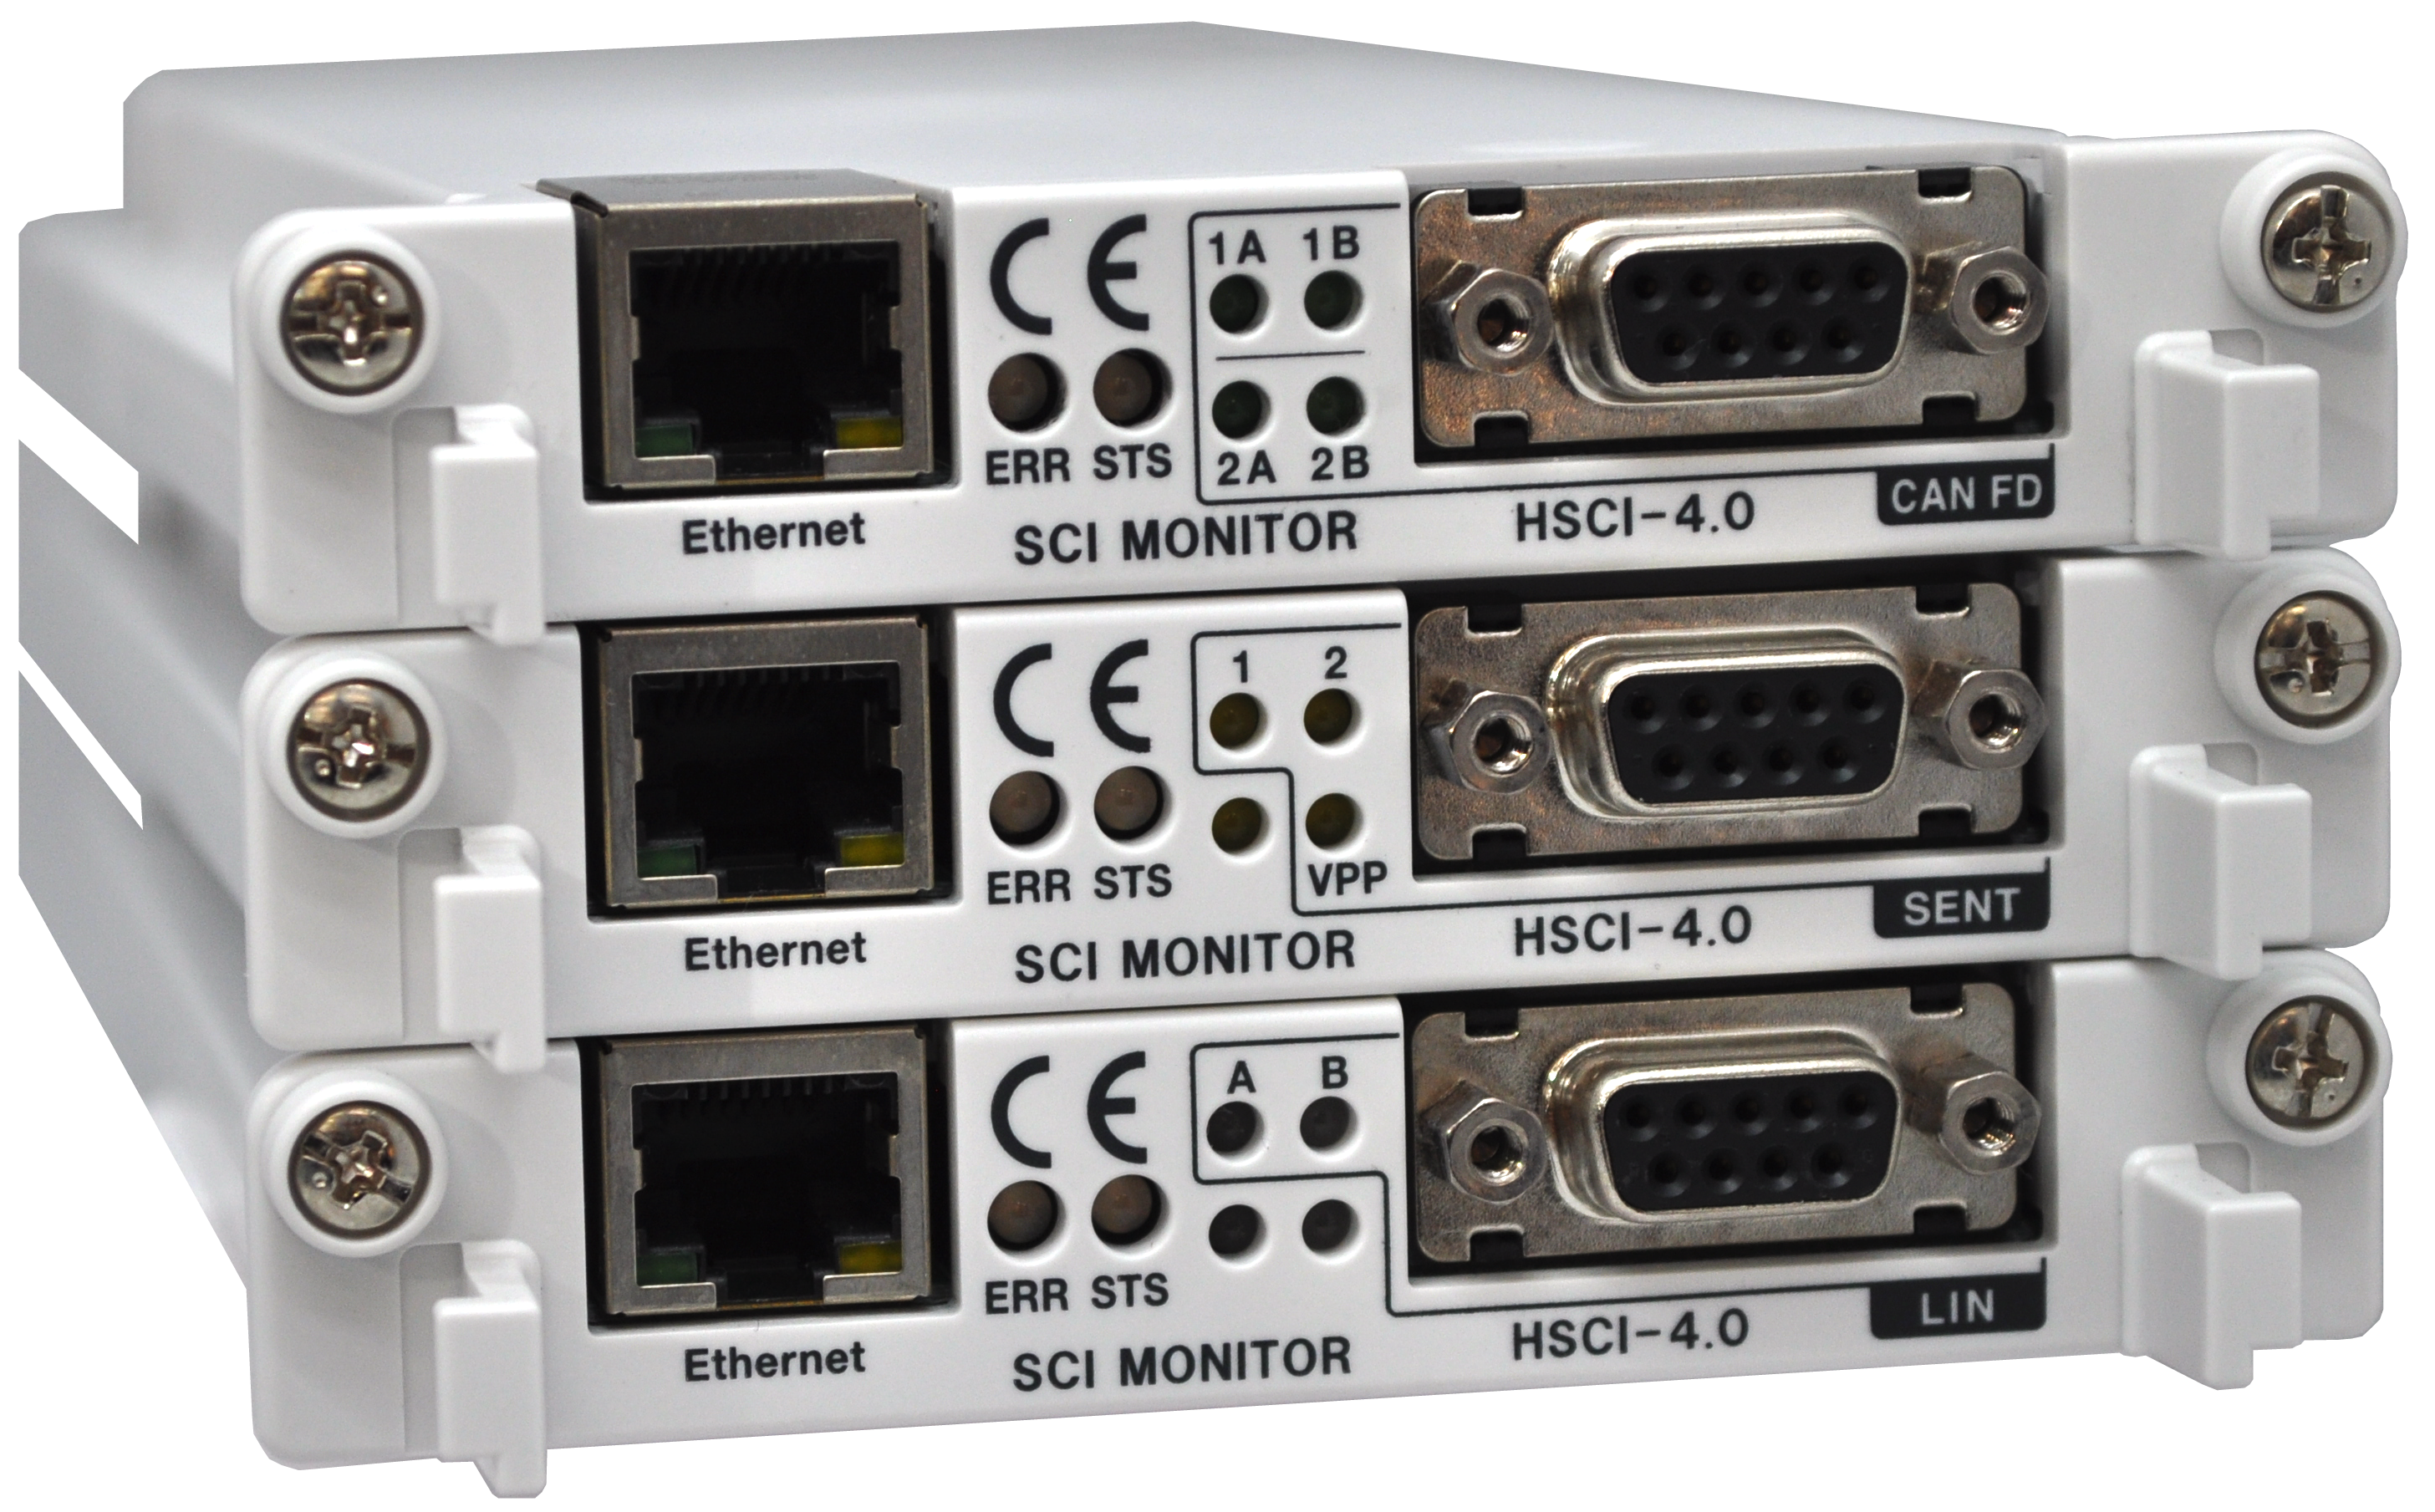 SCI Monitor 4 series